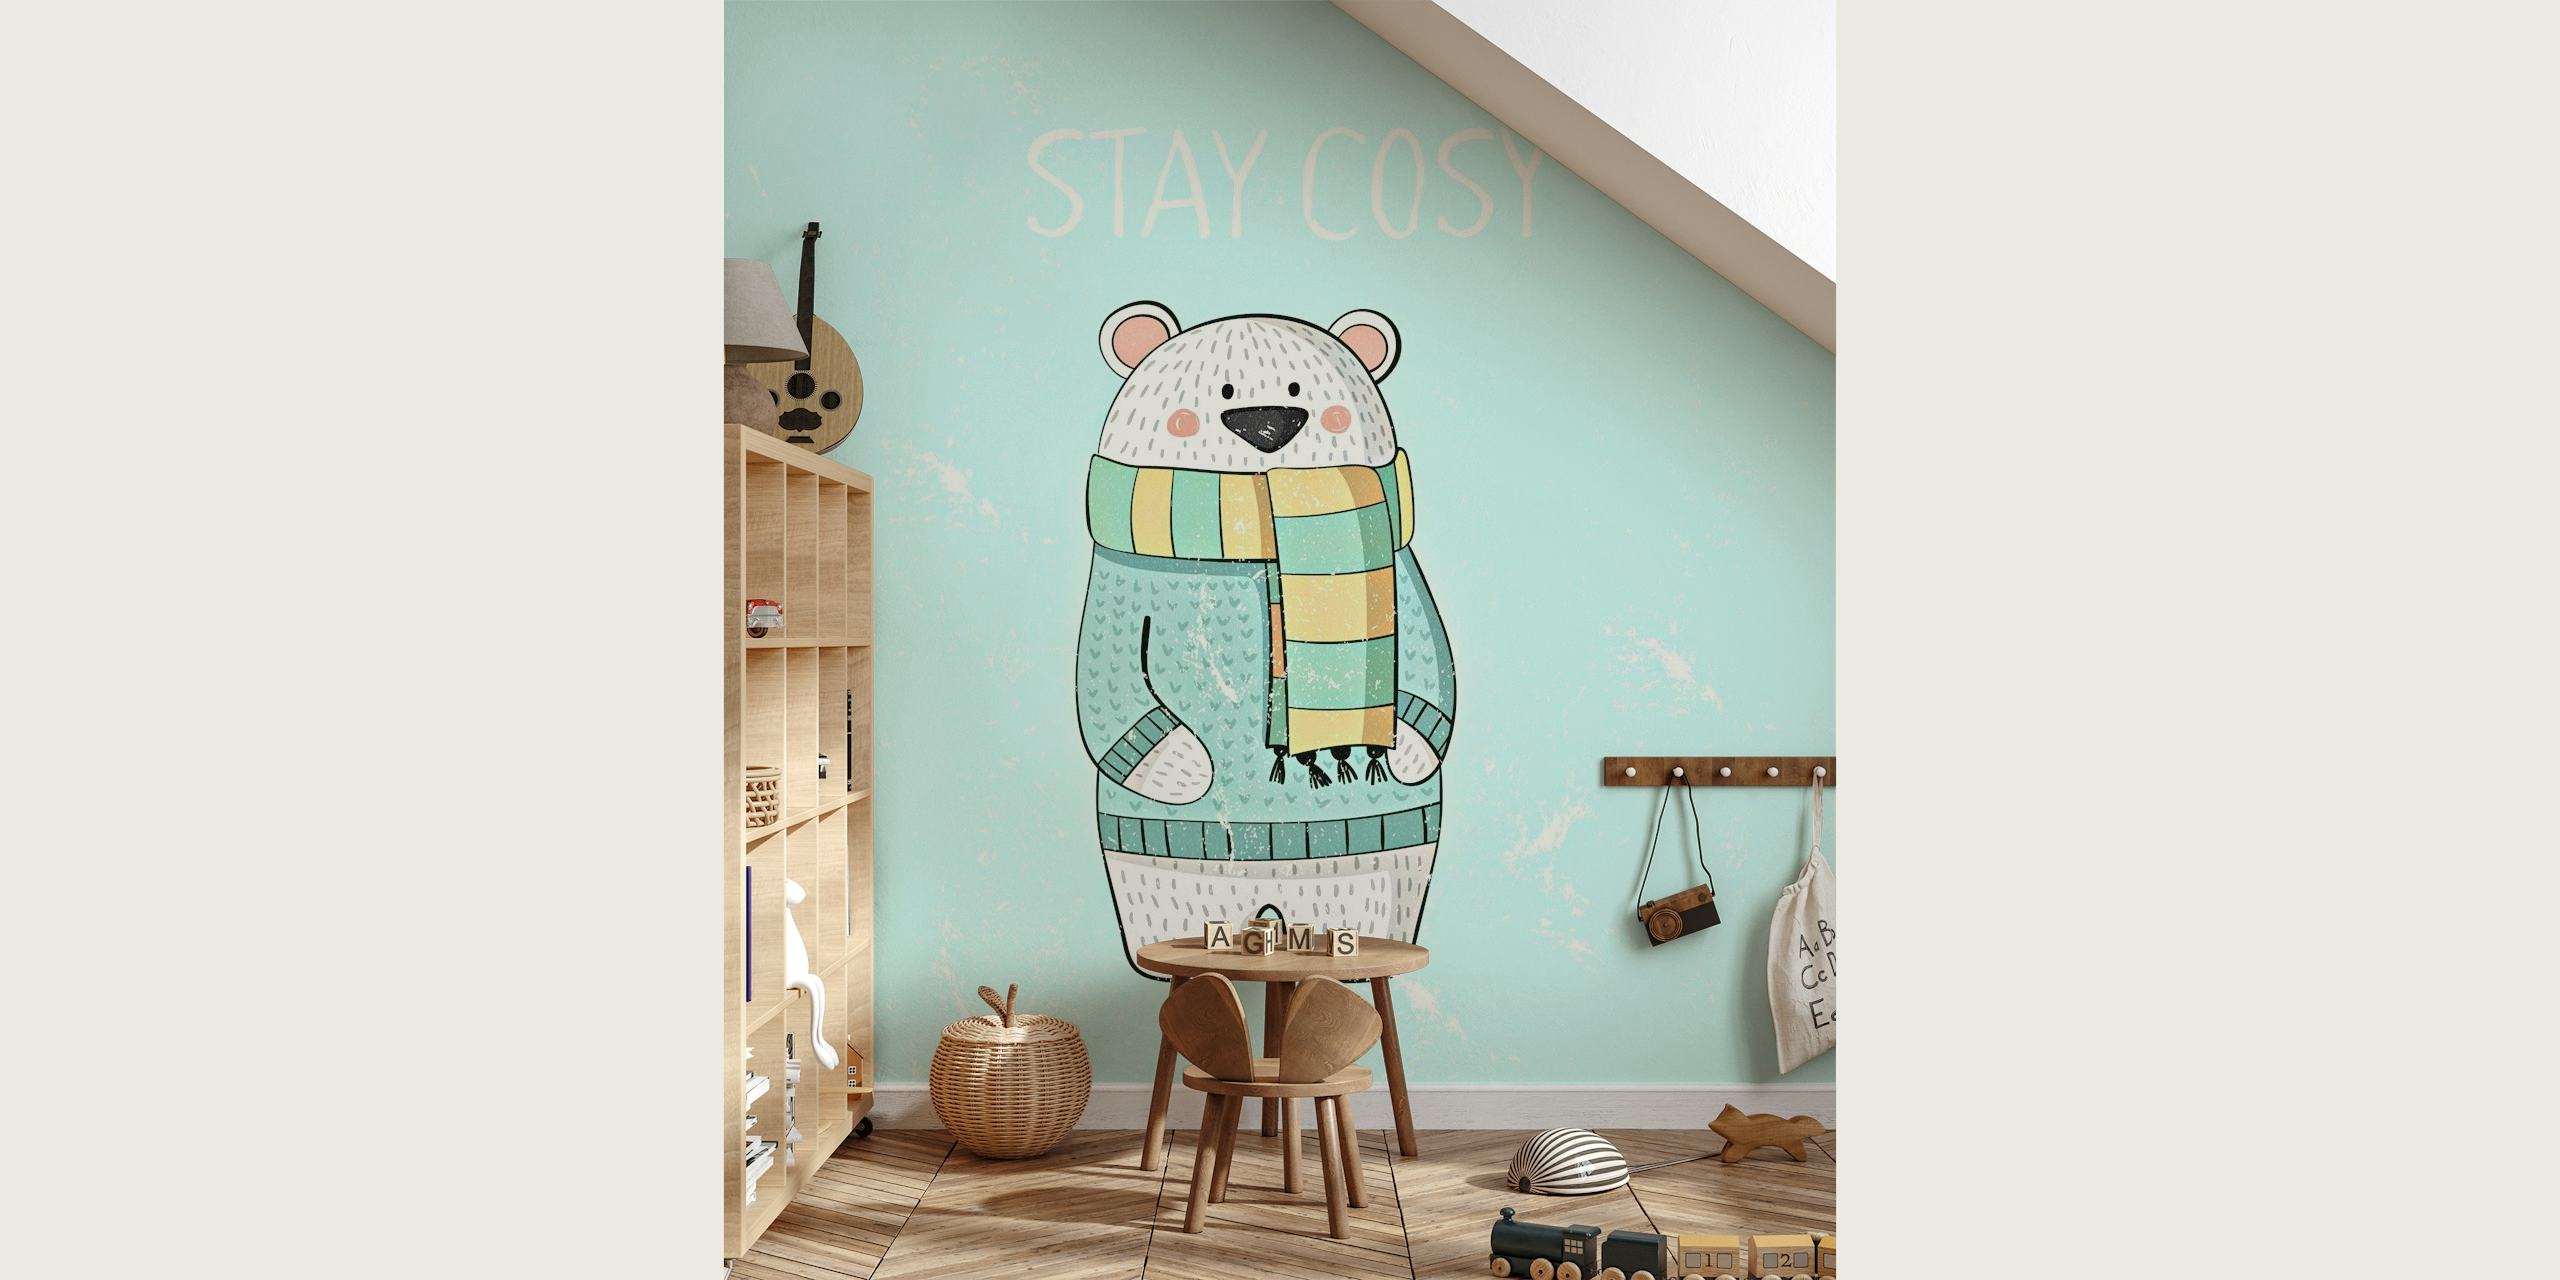 Polar Bear Stay Cosy wall mural with a cute bear in a scarf